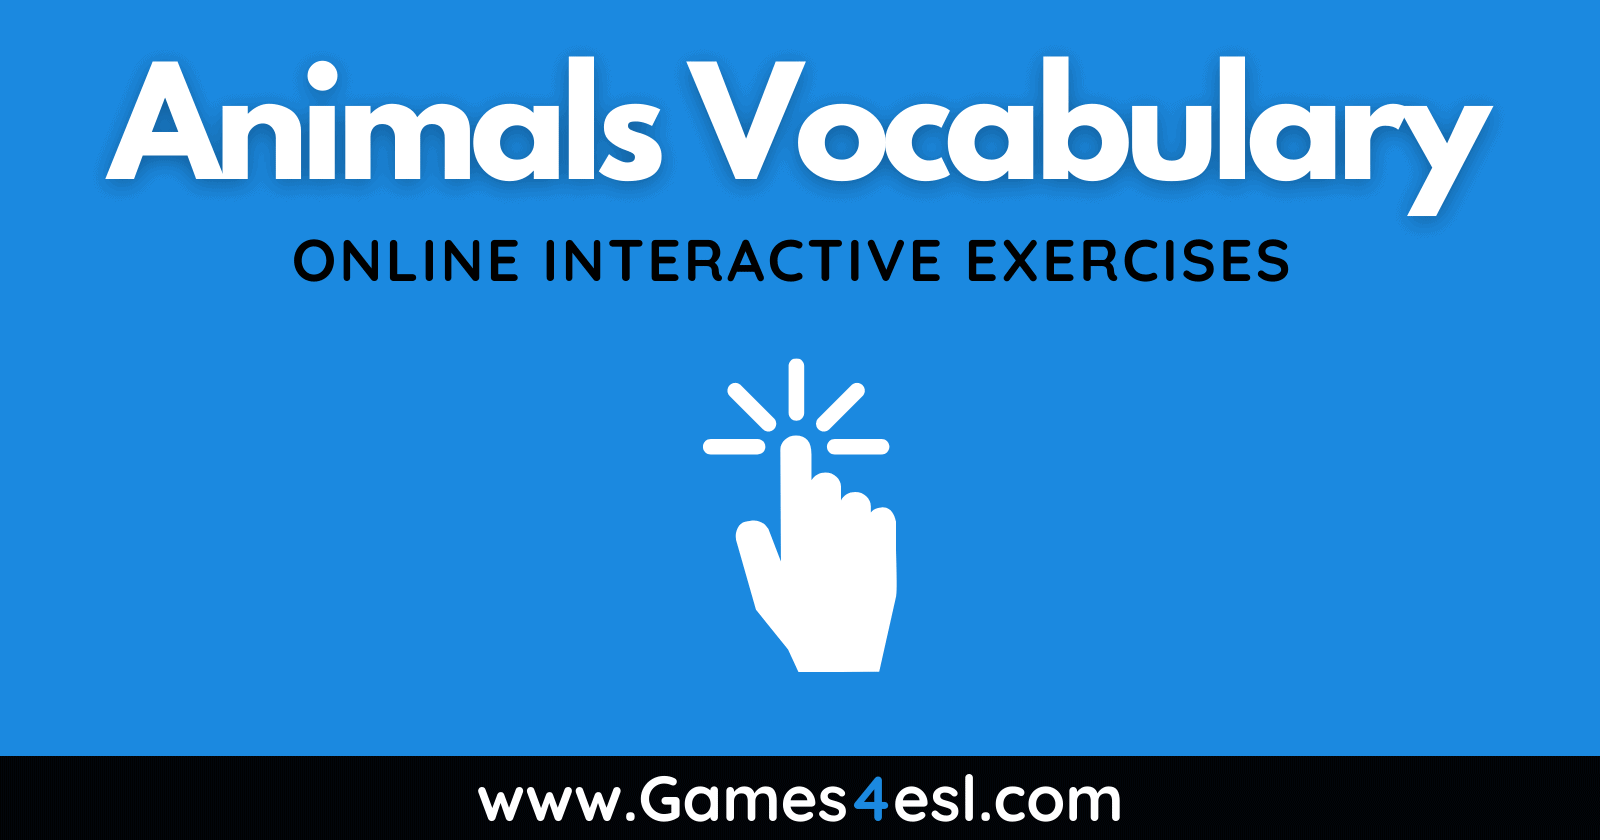 Animals Vocabulary Exercises